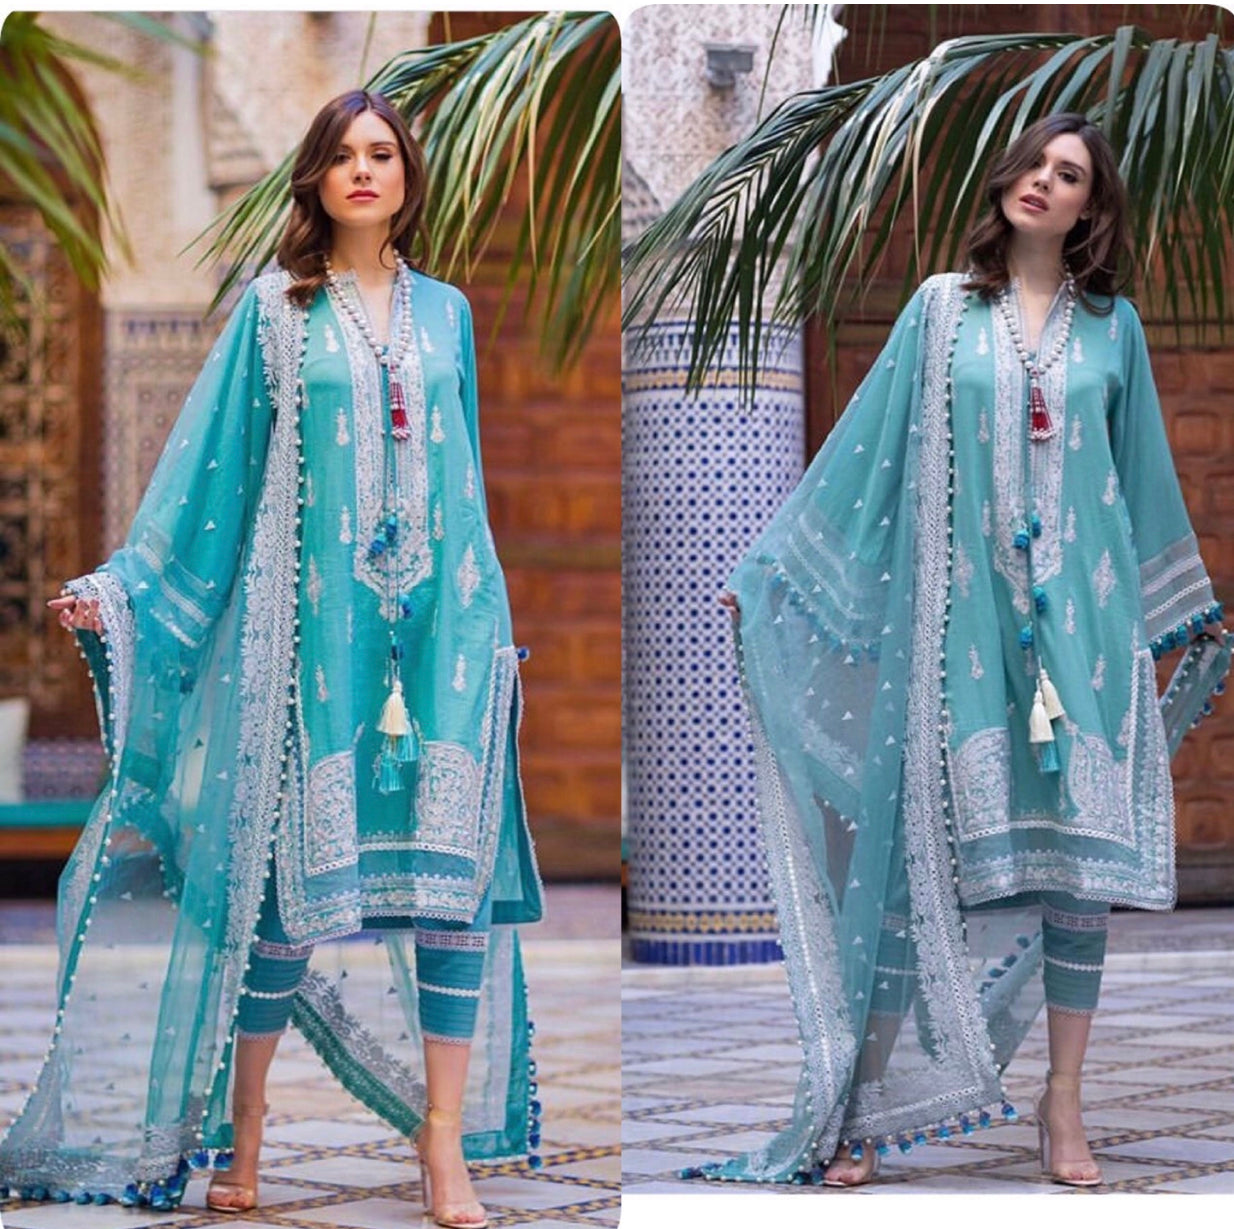 <img src="//cdn.shopify.com/s/files/1/0250/6109/7575/files/CB073ED5-0E30-4A88-AAE4-D8DAFE5A0E9C.jpeg?v=1593726775" alt="Sobia Nazir net embroidered dress Pakistani fashion unstitched 